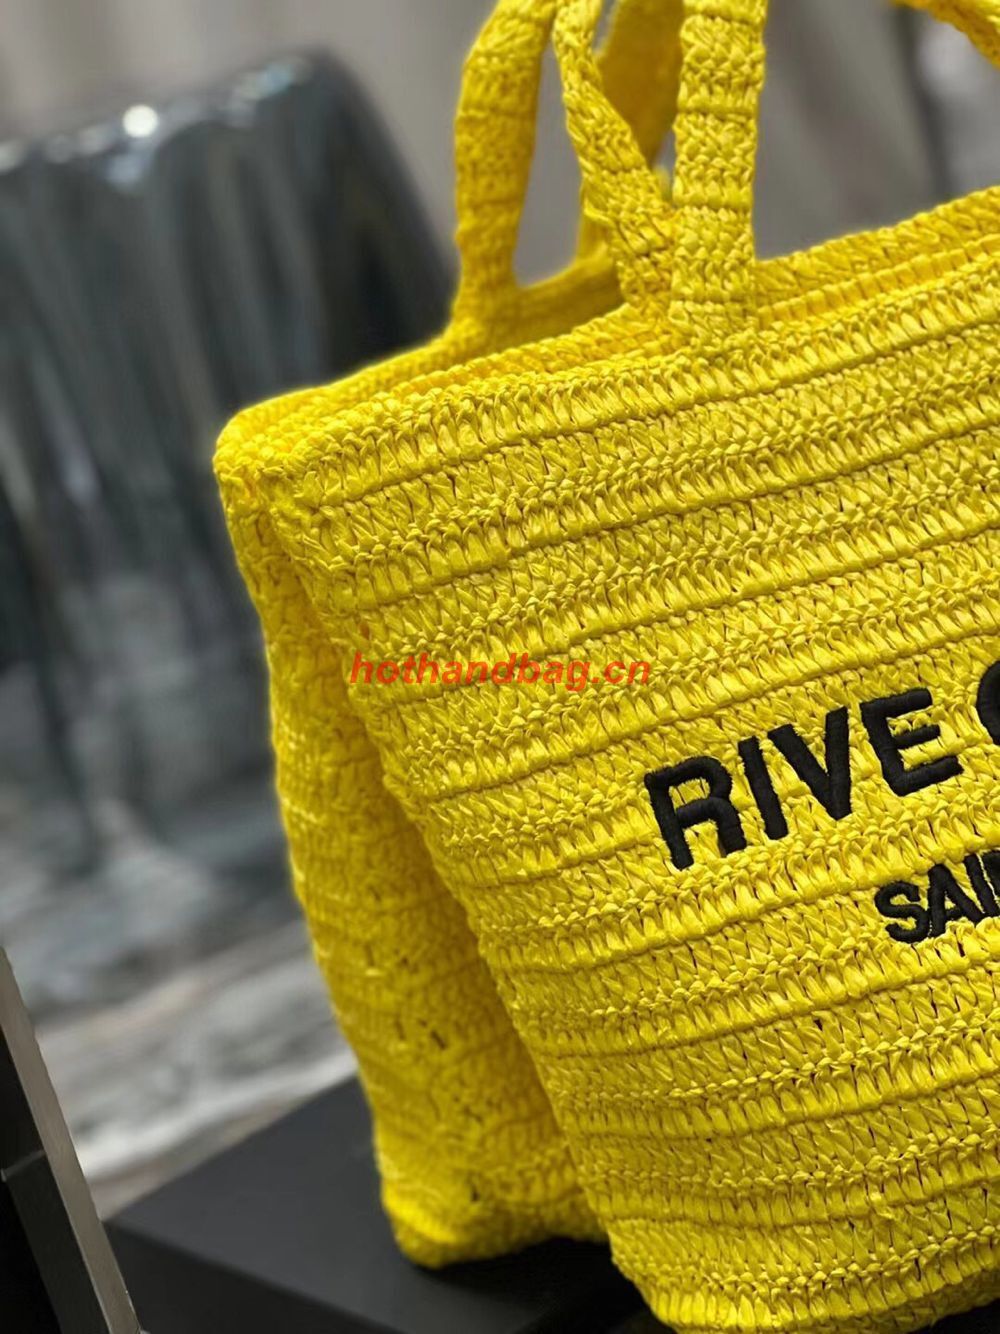 SAINT LAURENT RIVE GAUCHE SUPPLE TOTE BAG IN RAFFIA CROCHET 688864 yellow